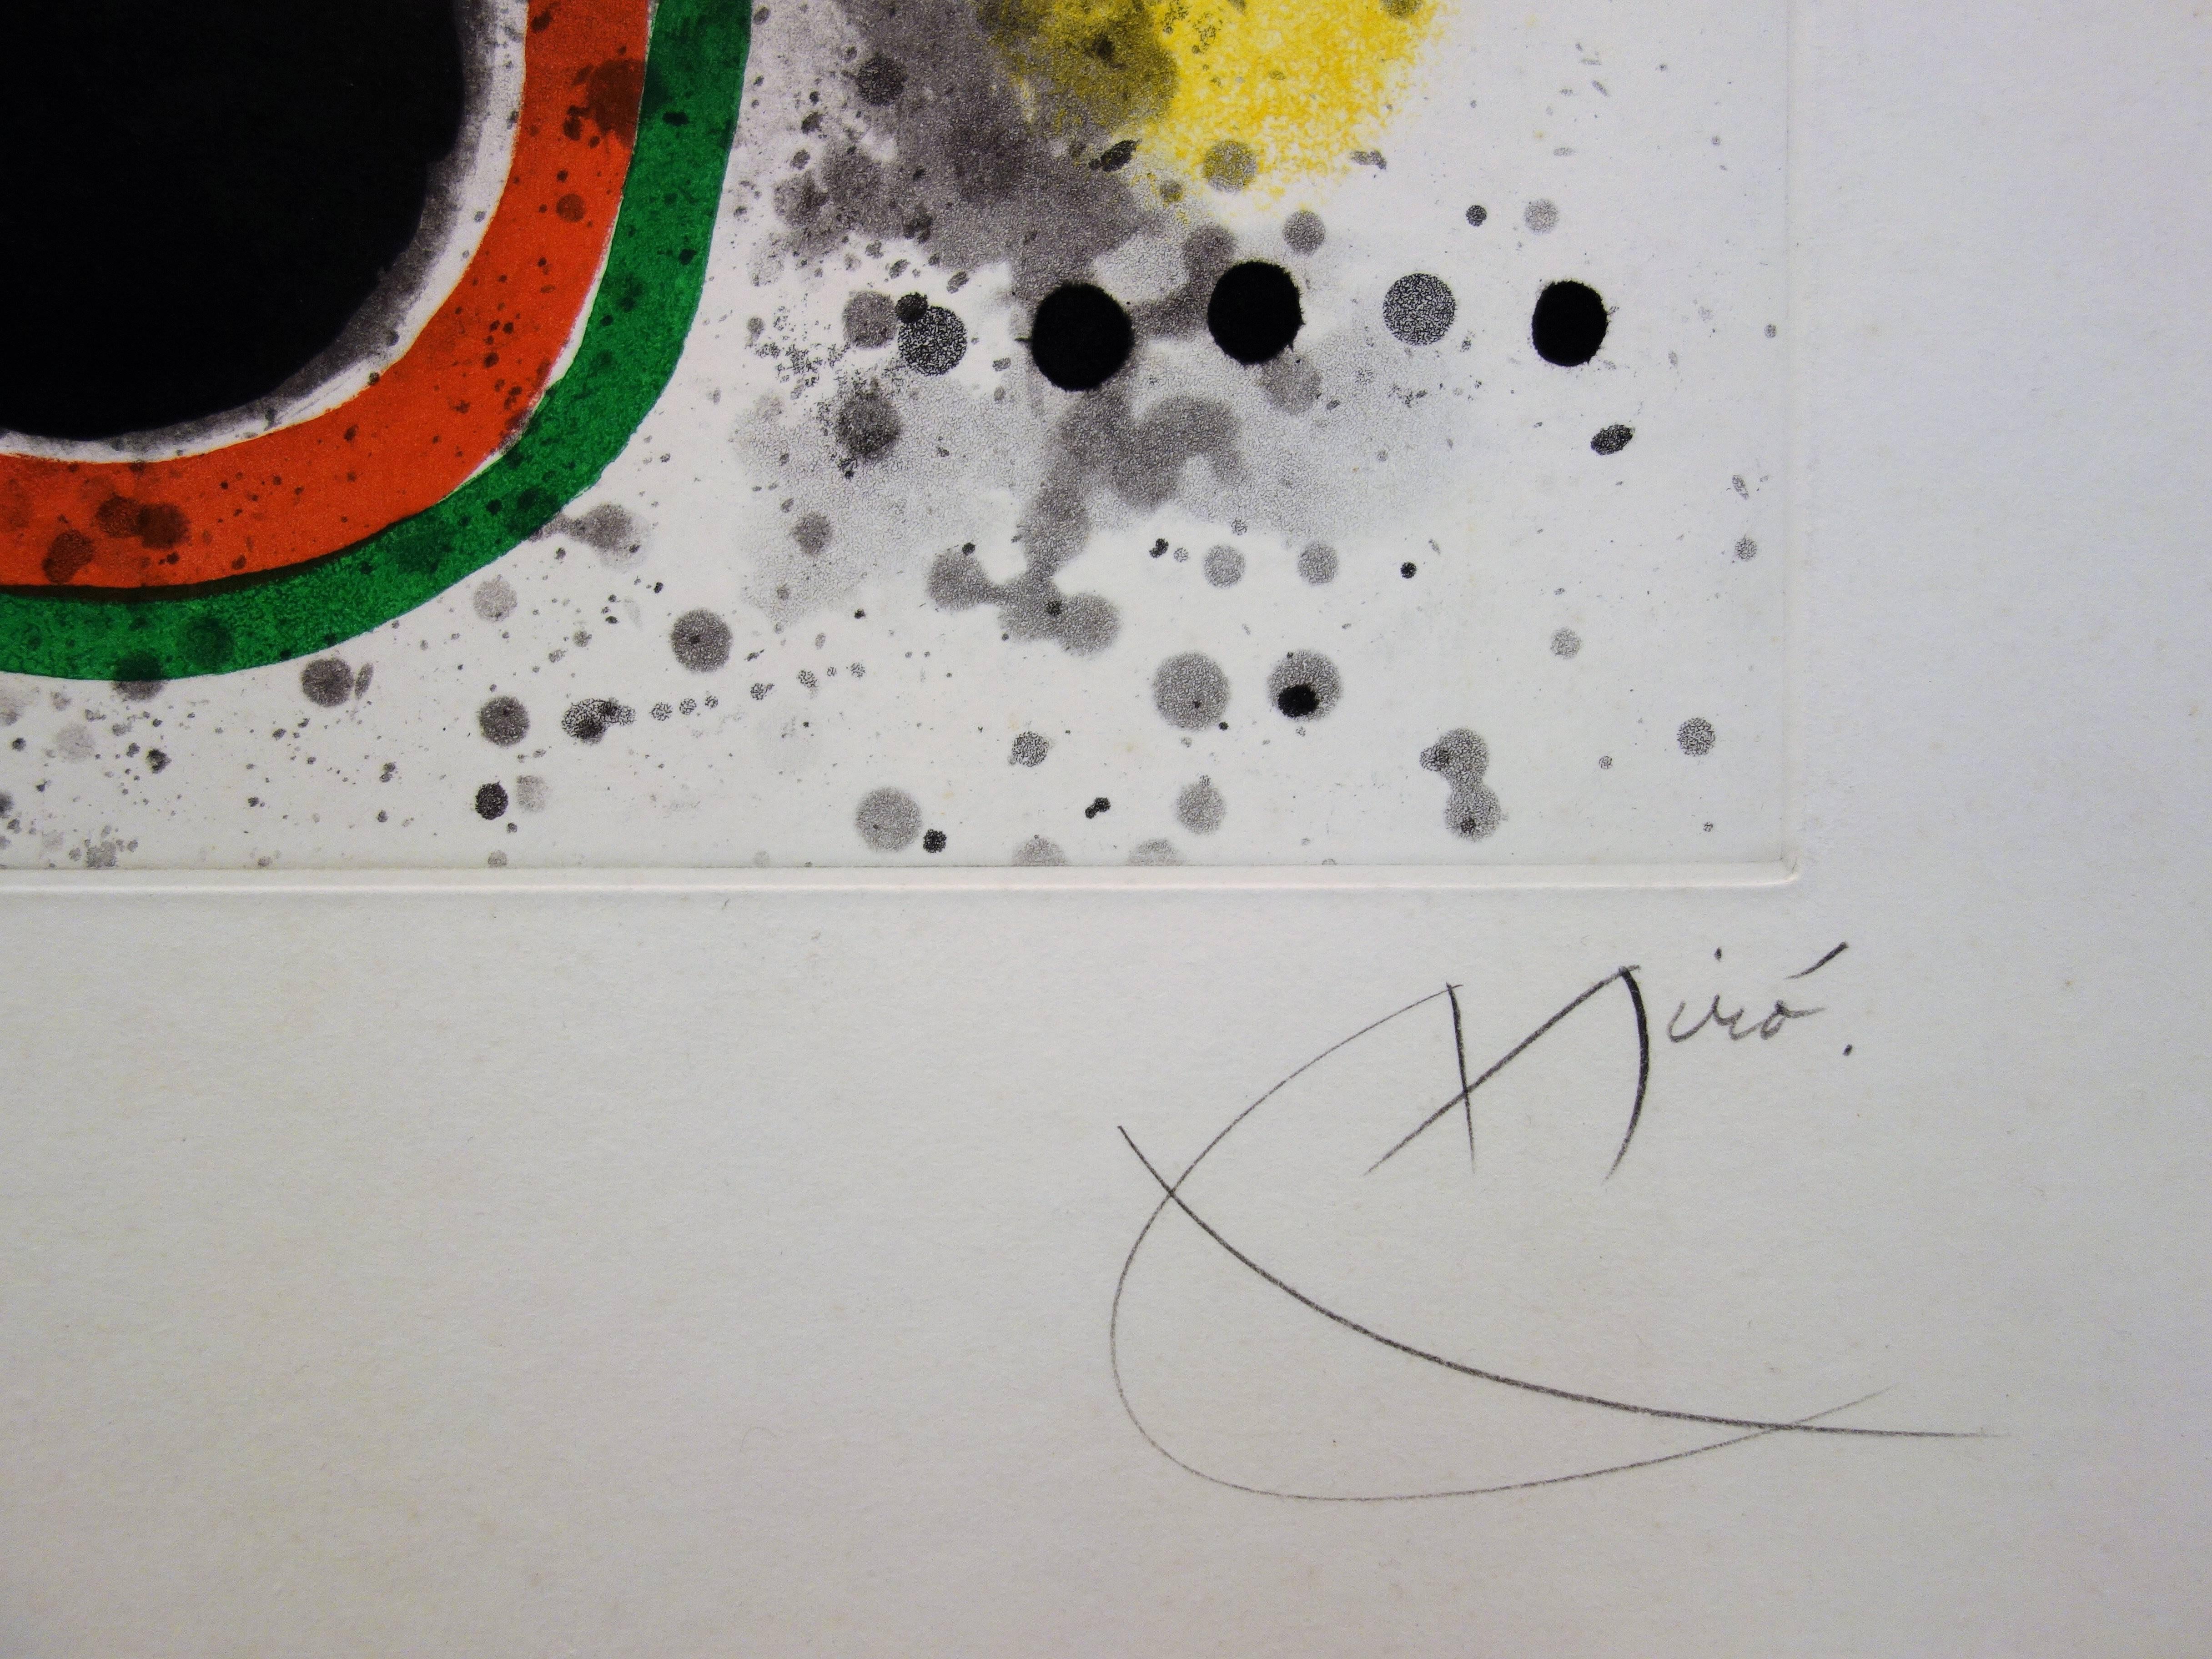 Sous la Grele (Under the Storm) - Original handsigned etching and aquatint, 1969 - Print by Joan Miró